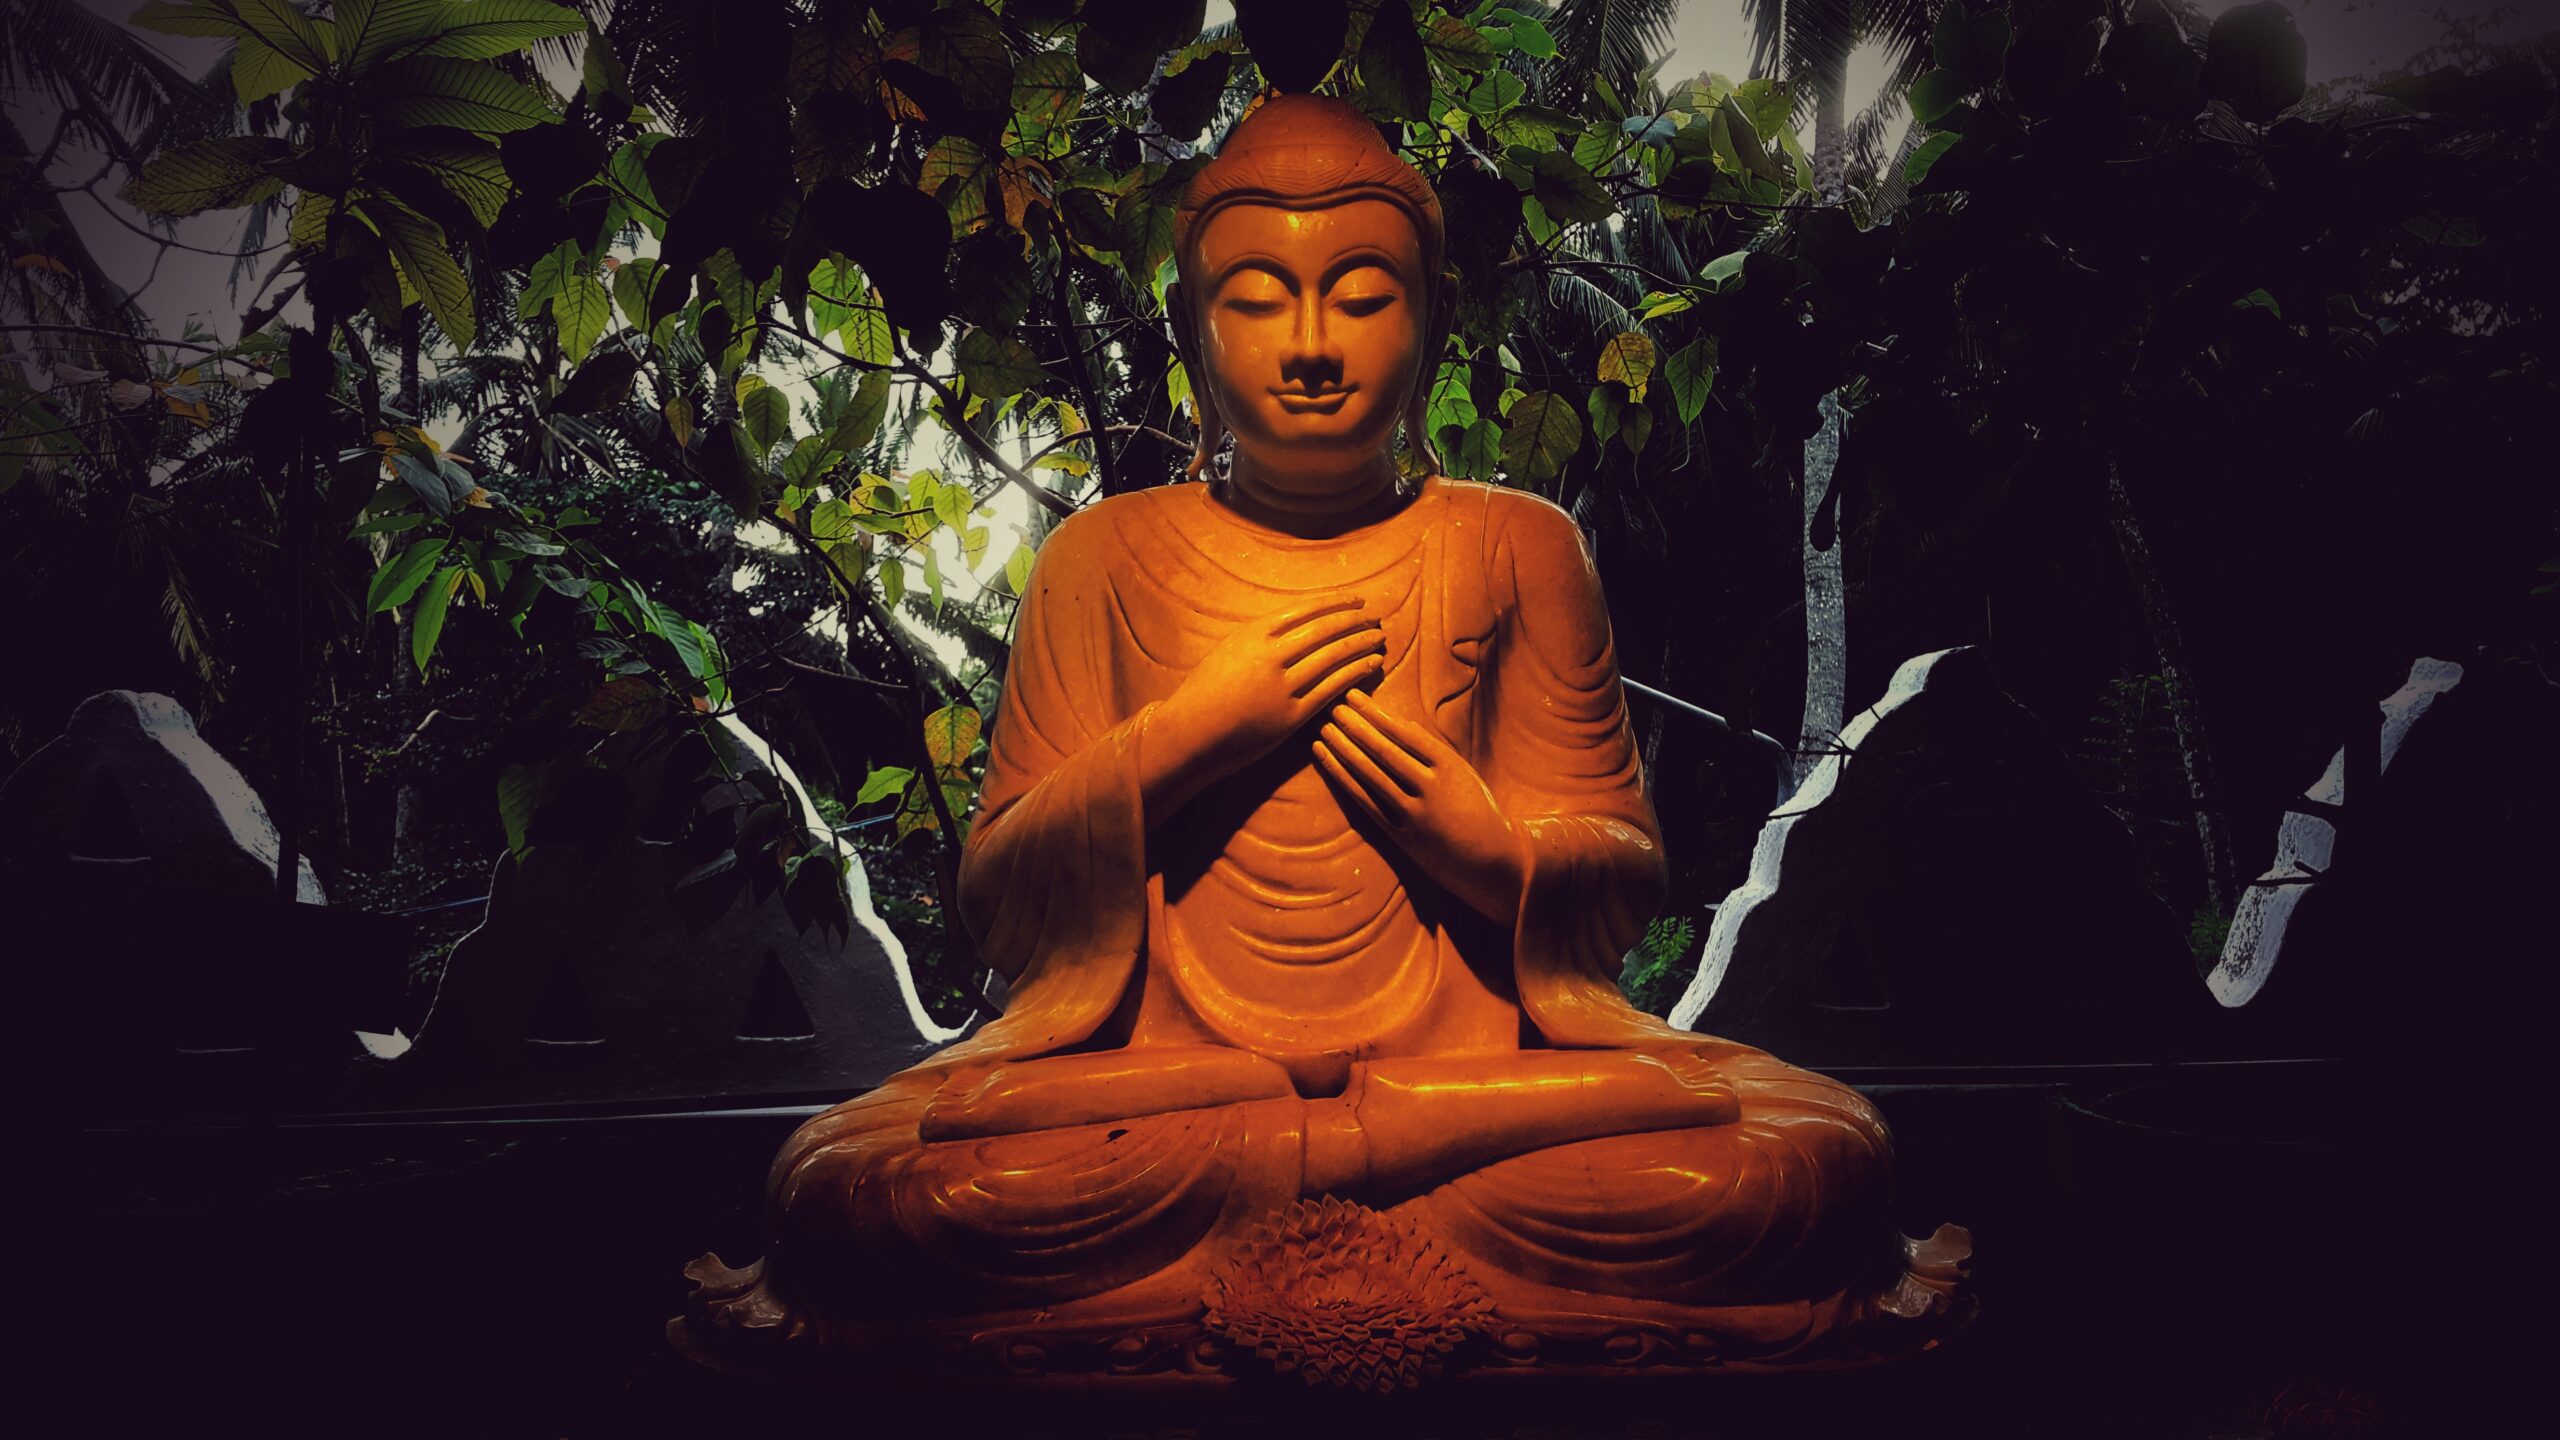 Shakyamuni Buddha, the founder of Buddhism, the central figure of Theravada Buddhism